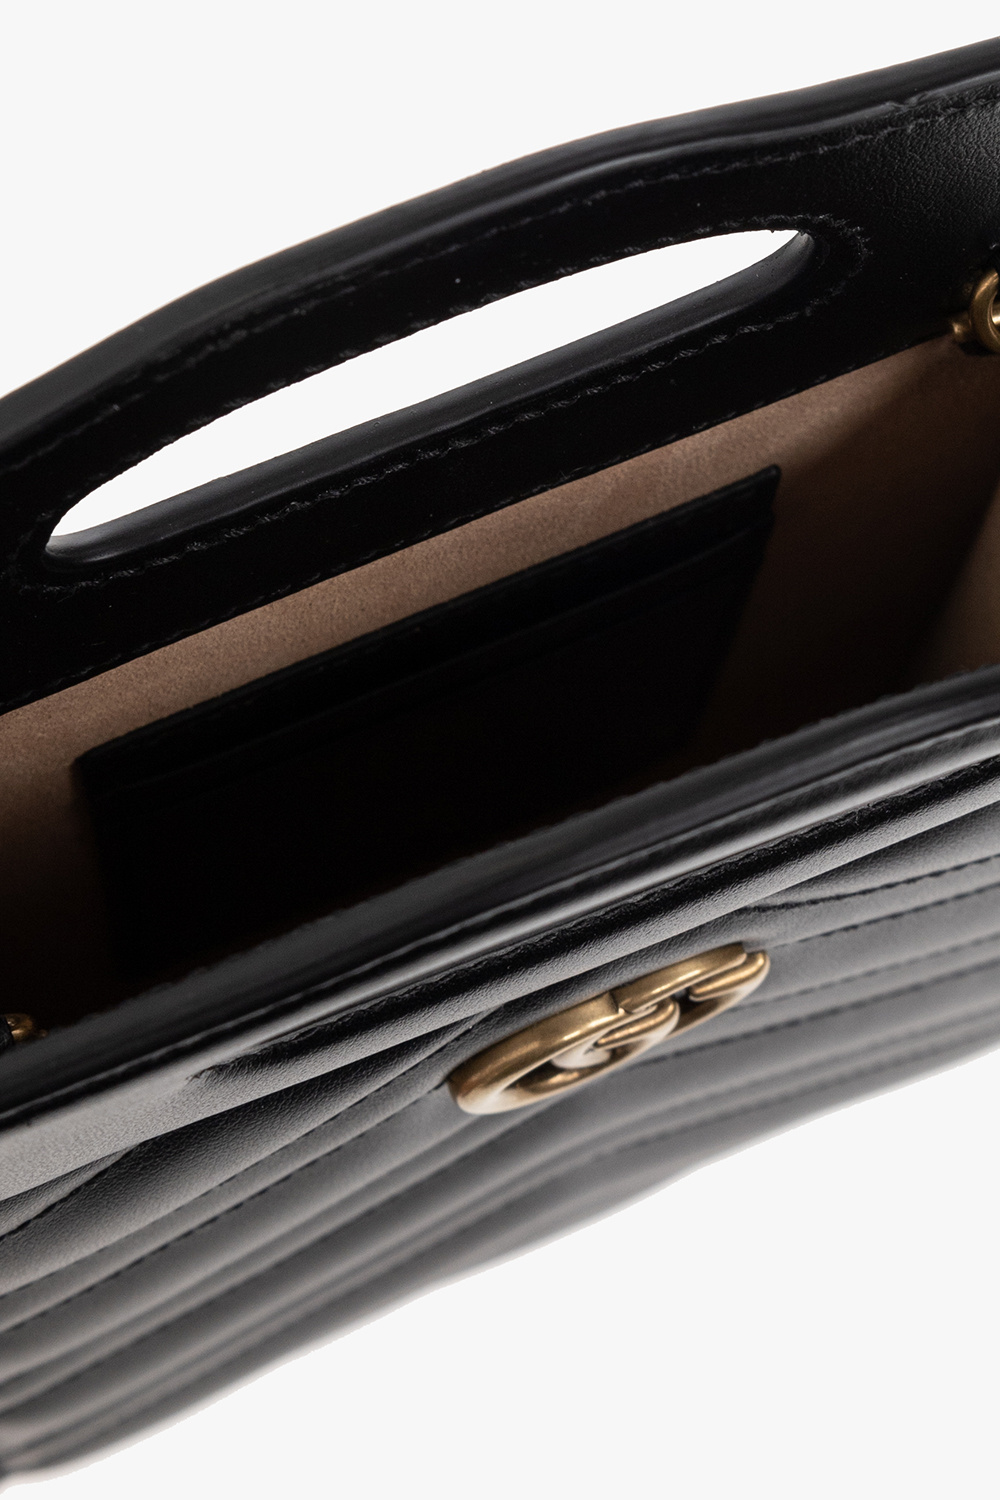 Gucci ‘GG Marmont 2.0’ shoulder bag